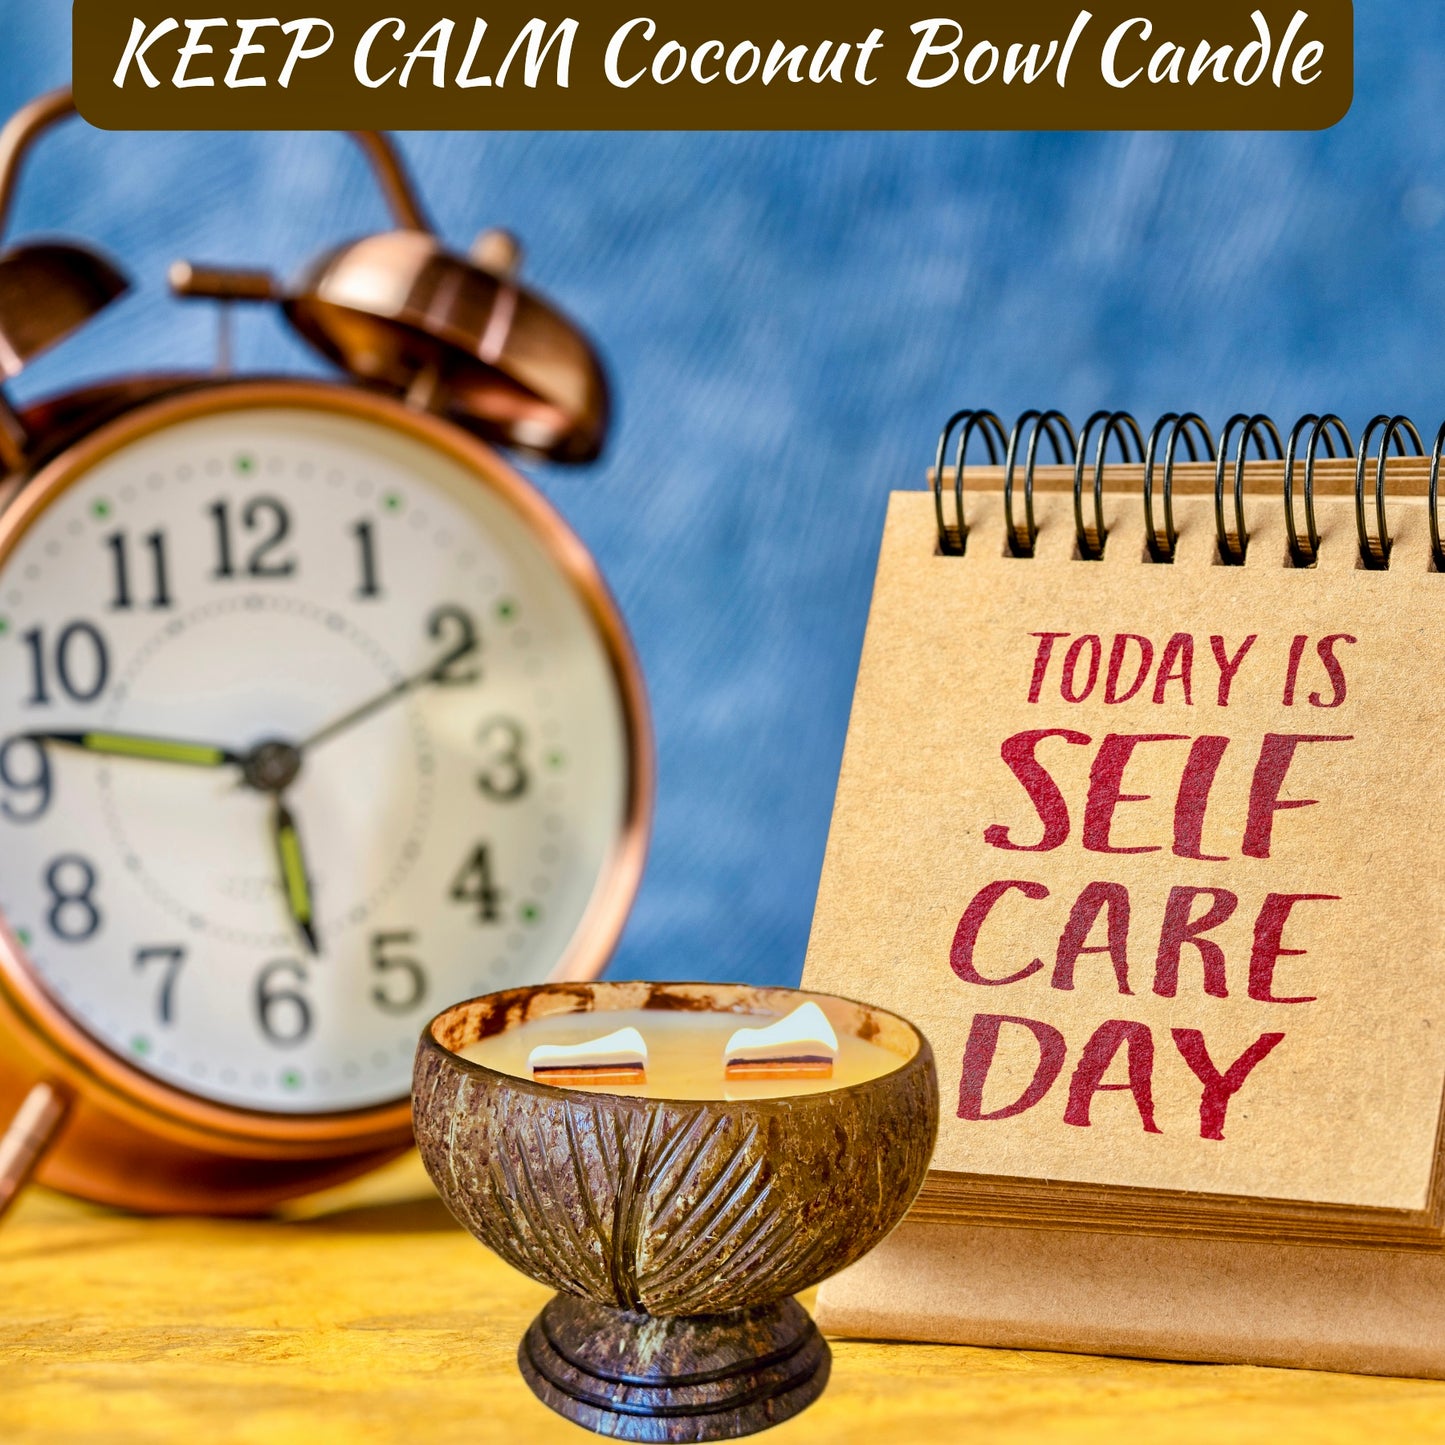 KEEP CALM Coconut Bowl Candle